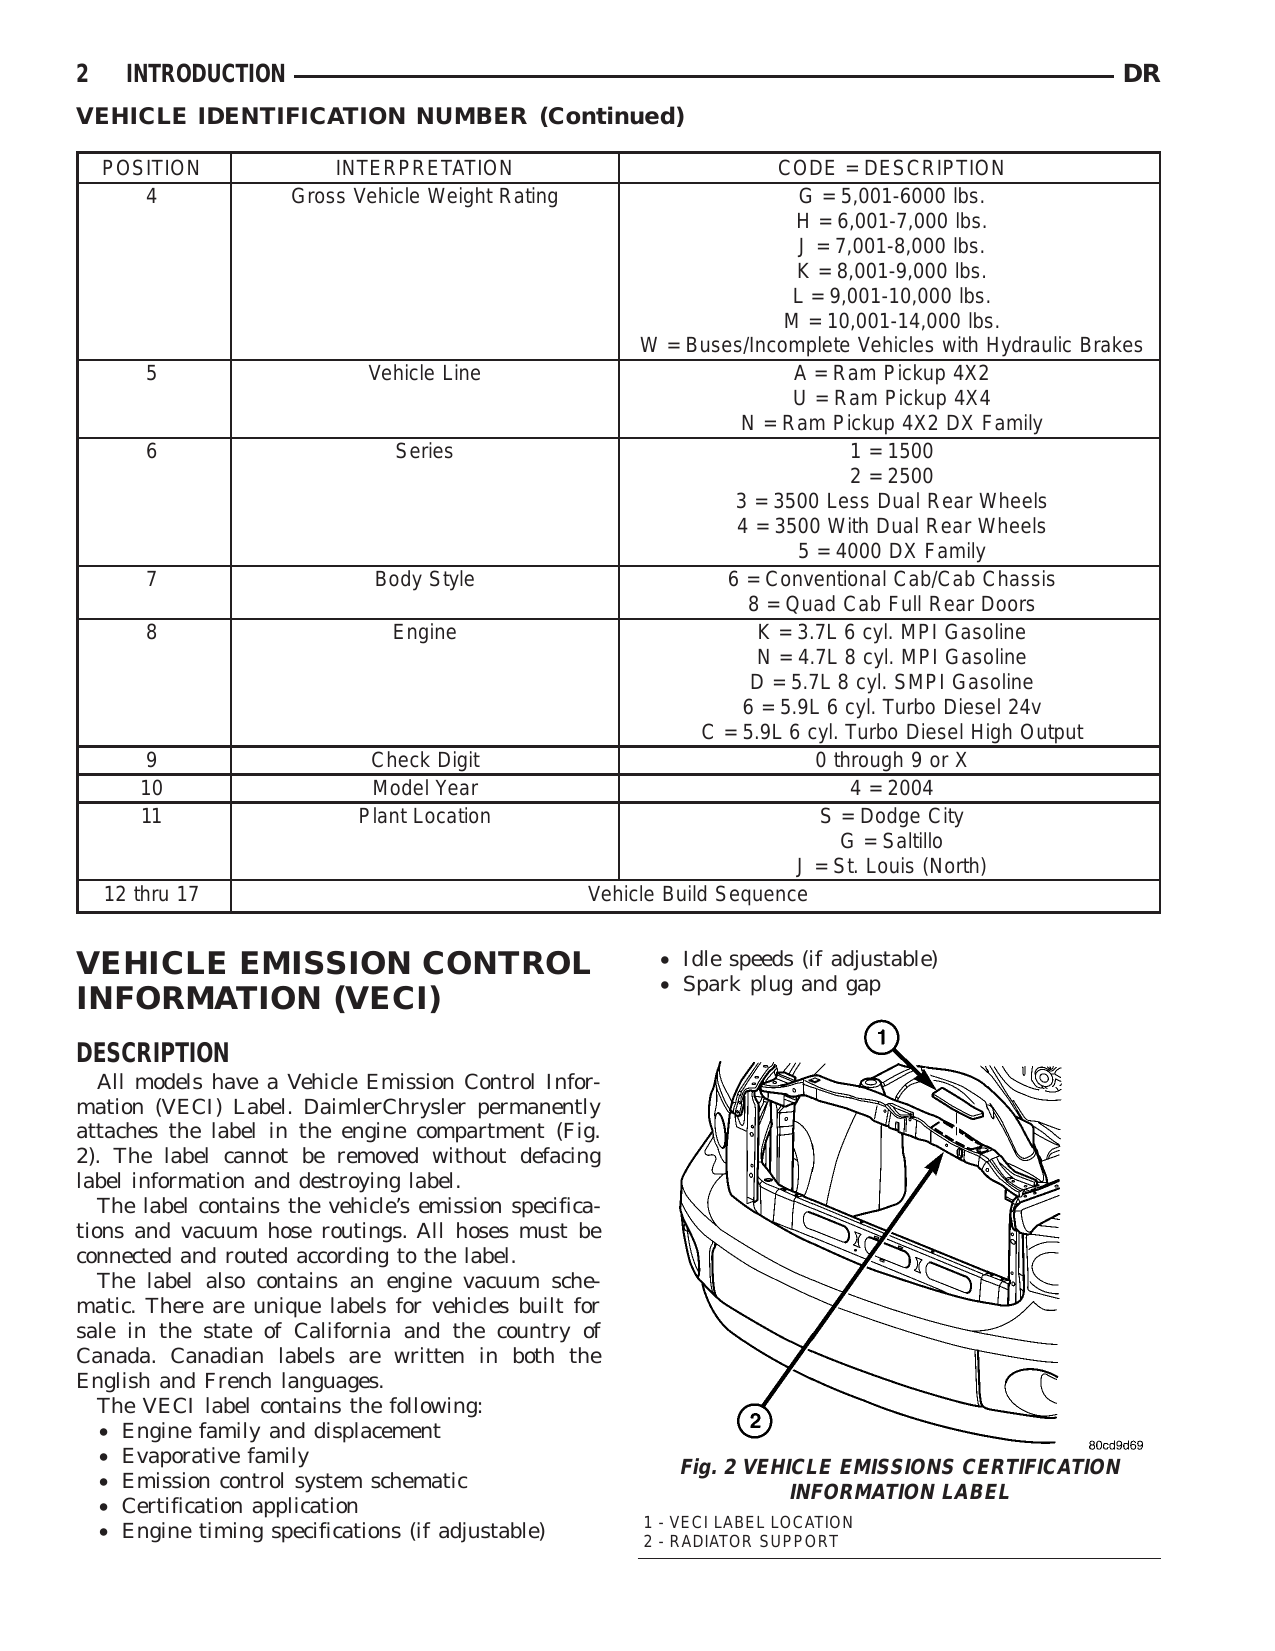 2004 Dodge RAM 1500, 2500, 3500 pickup truck manual Preview image 3